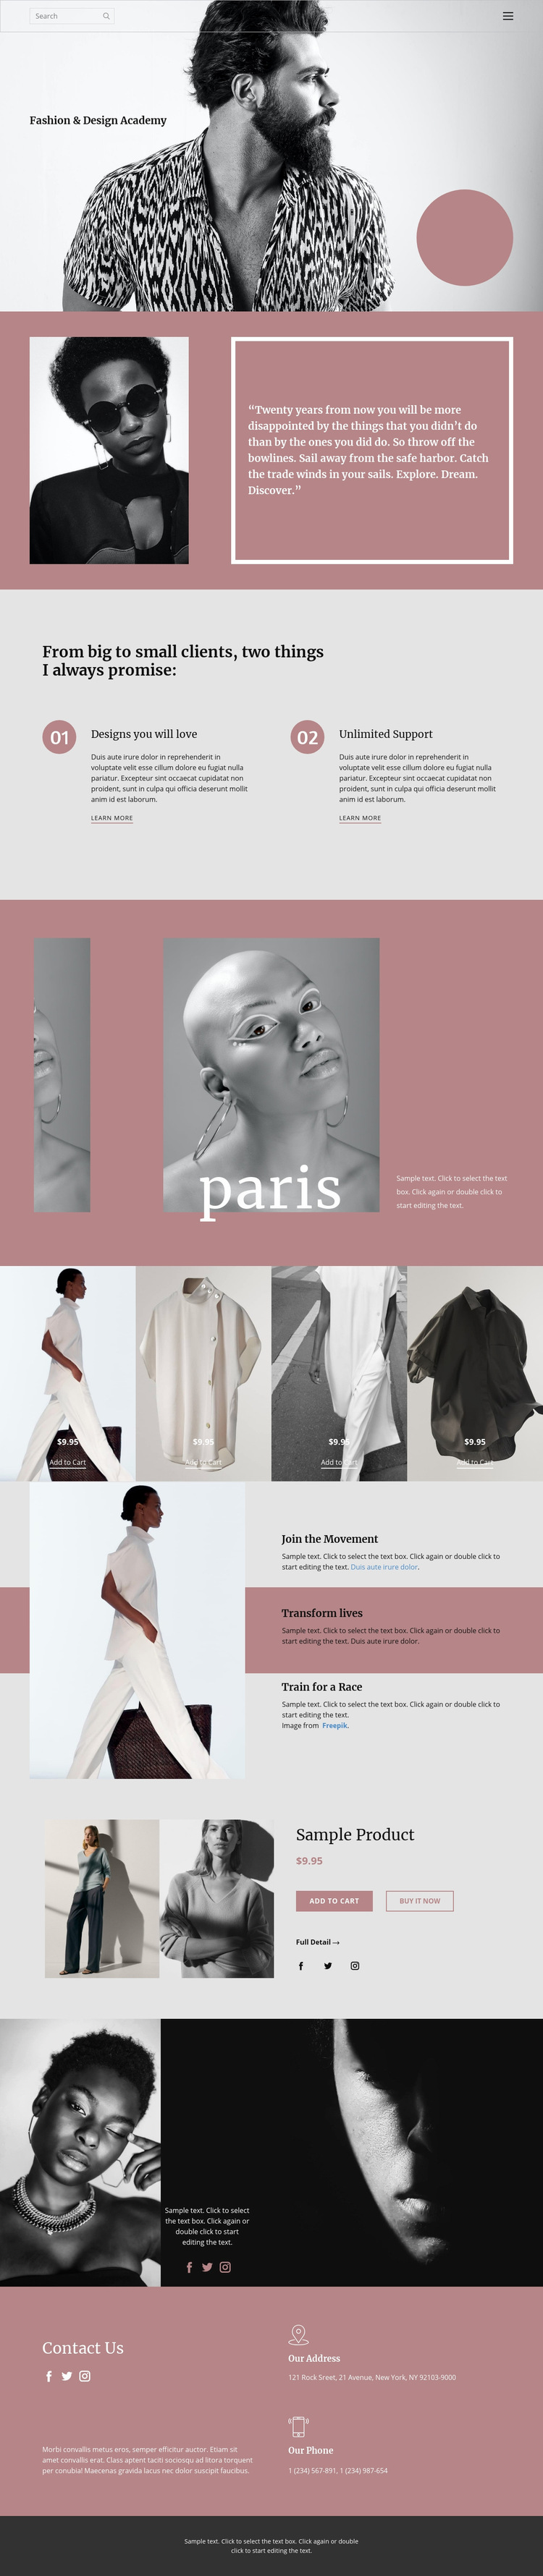 Fashion studio Web Page Design